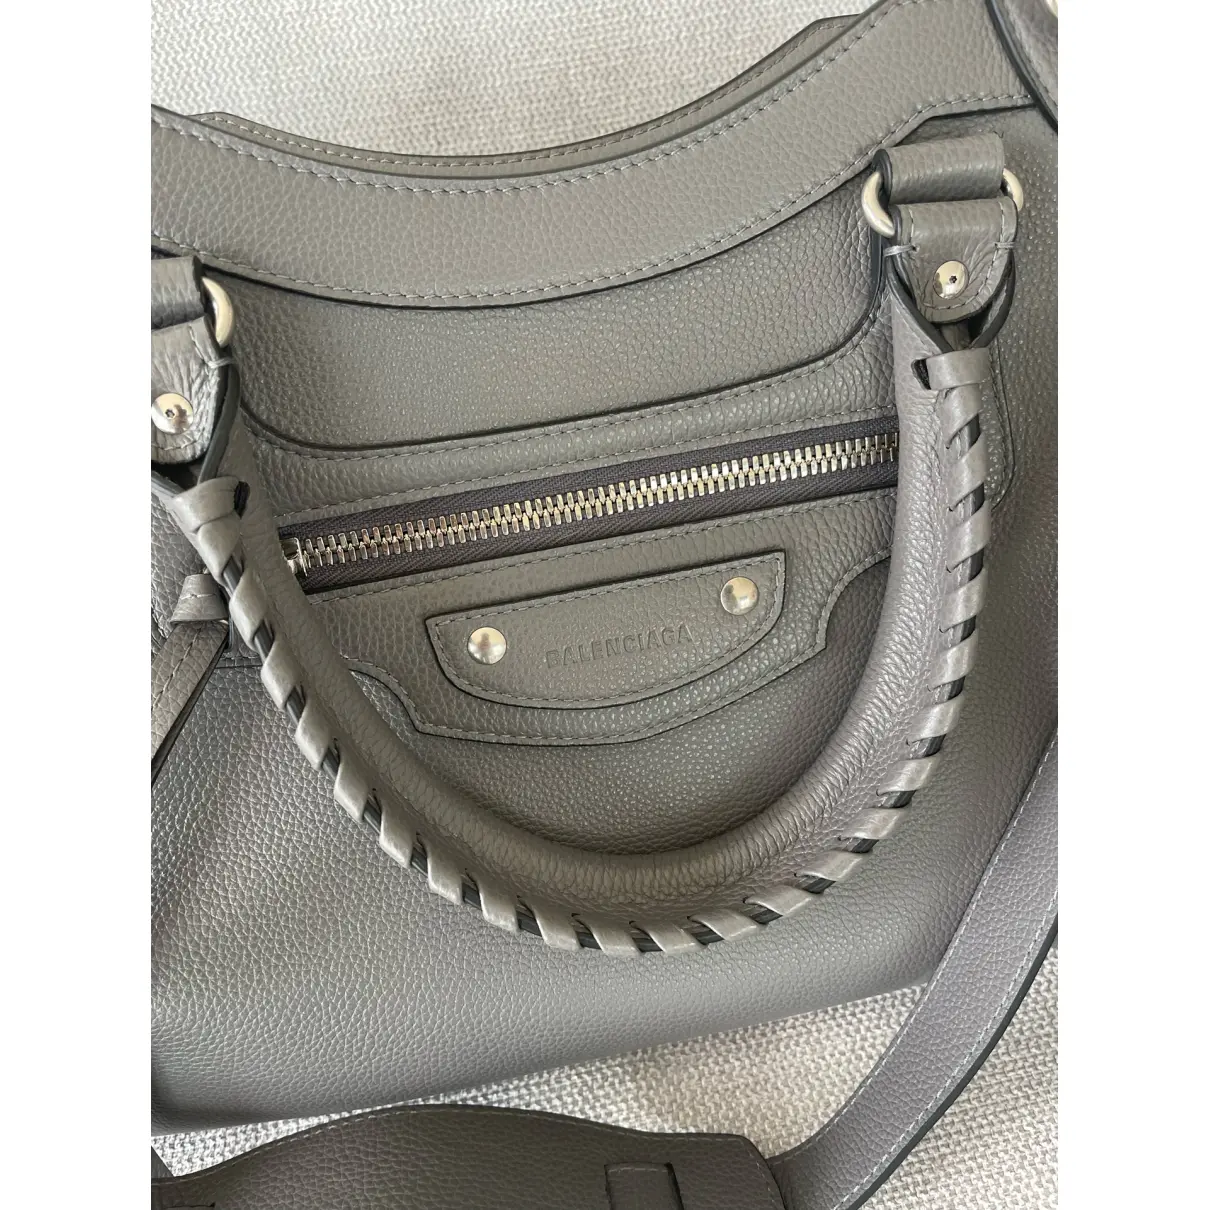 Neo Classic leather handbag Balenciaga